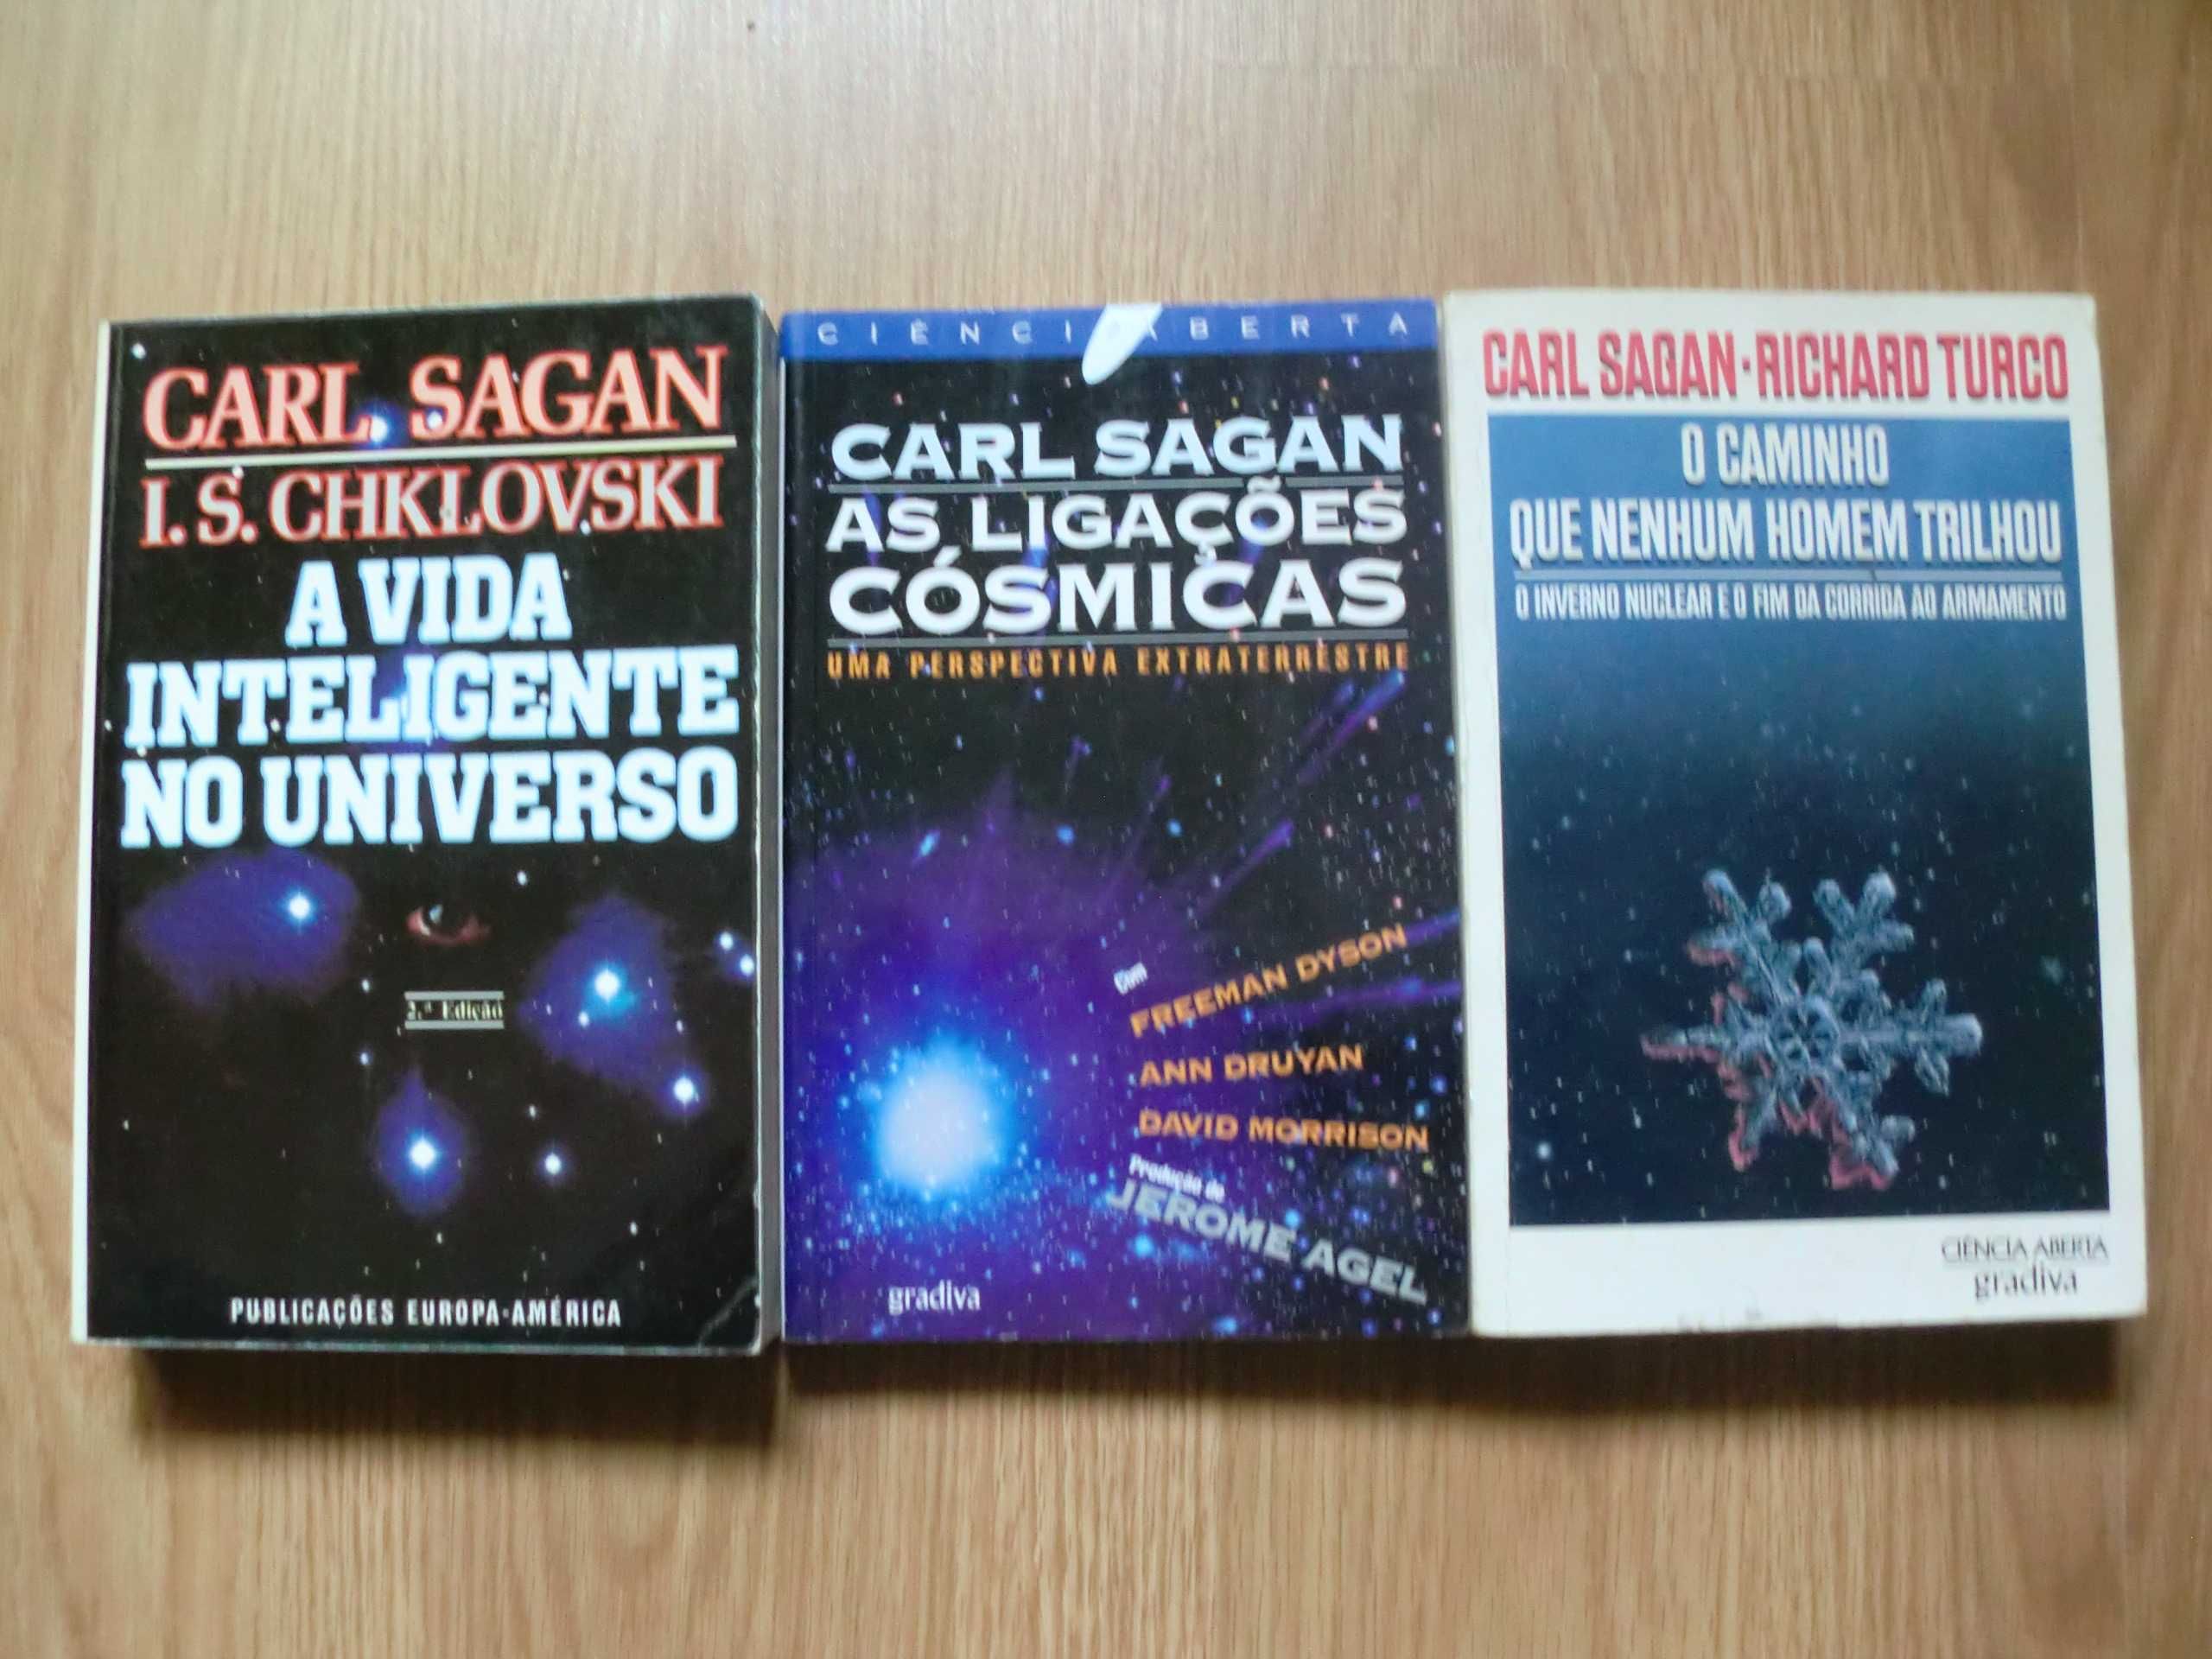 Obras de Carl Sagan